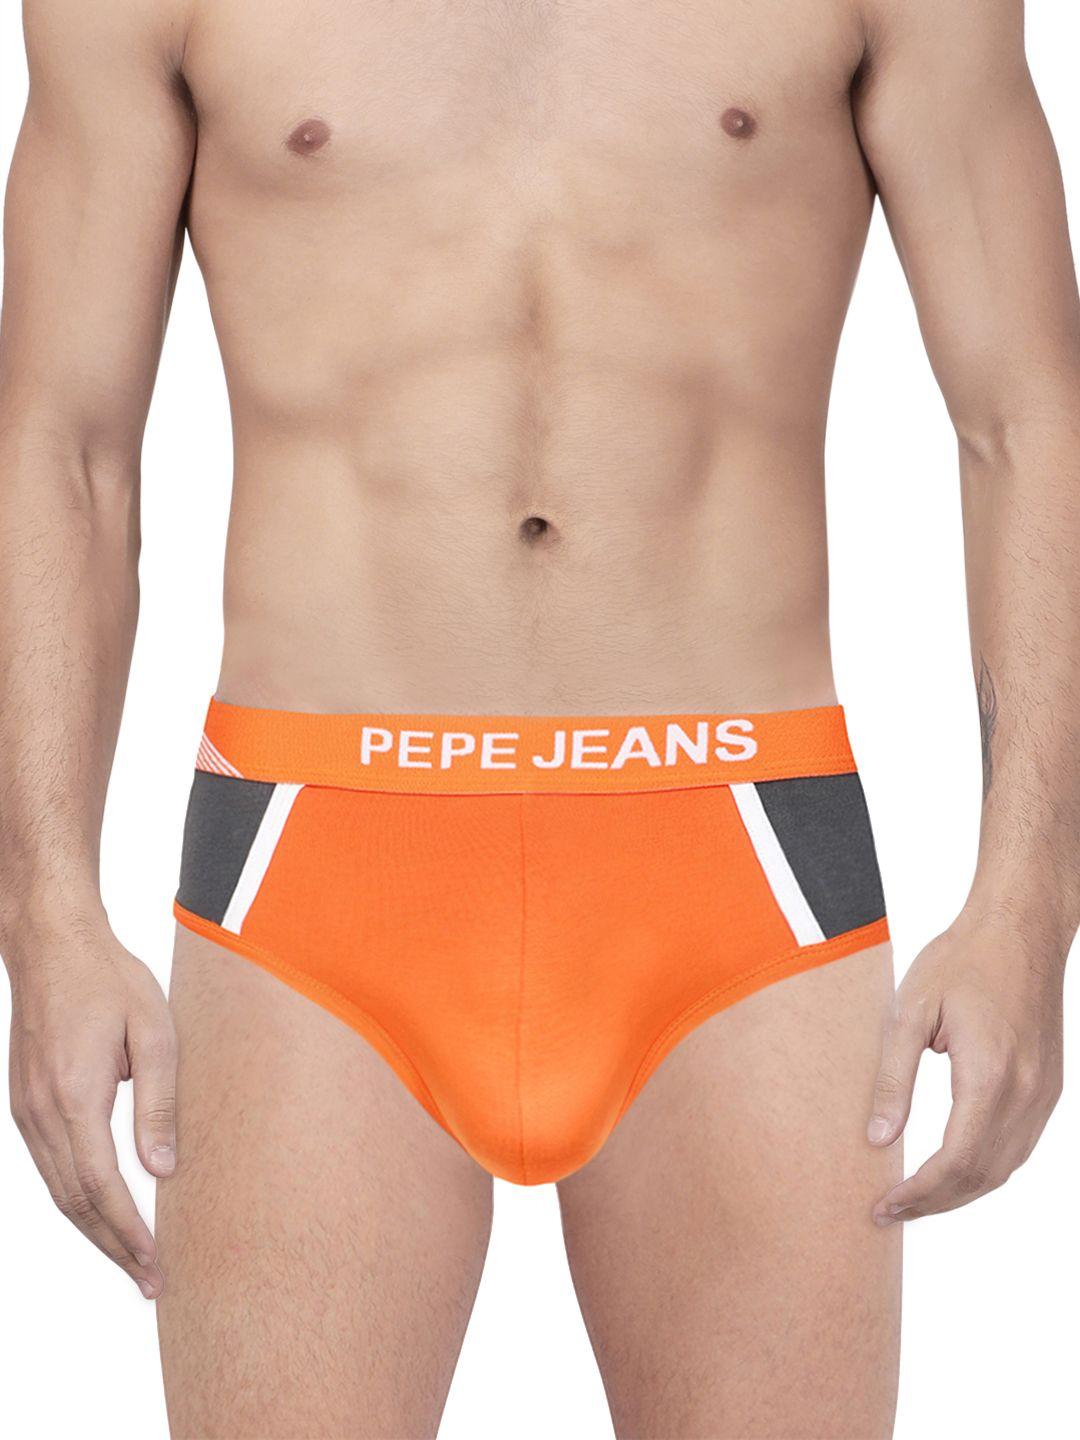 pepe-jeans-men-orange-&-grey-colourblocked-briefs-8904311303756